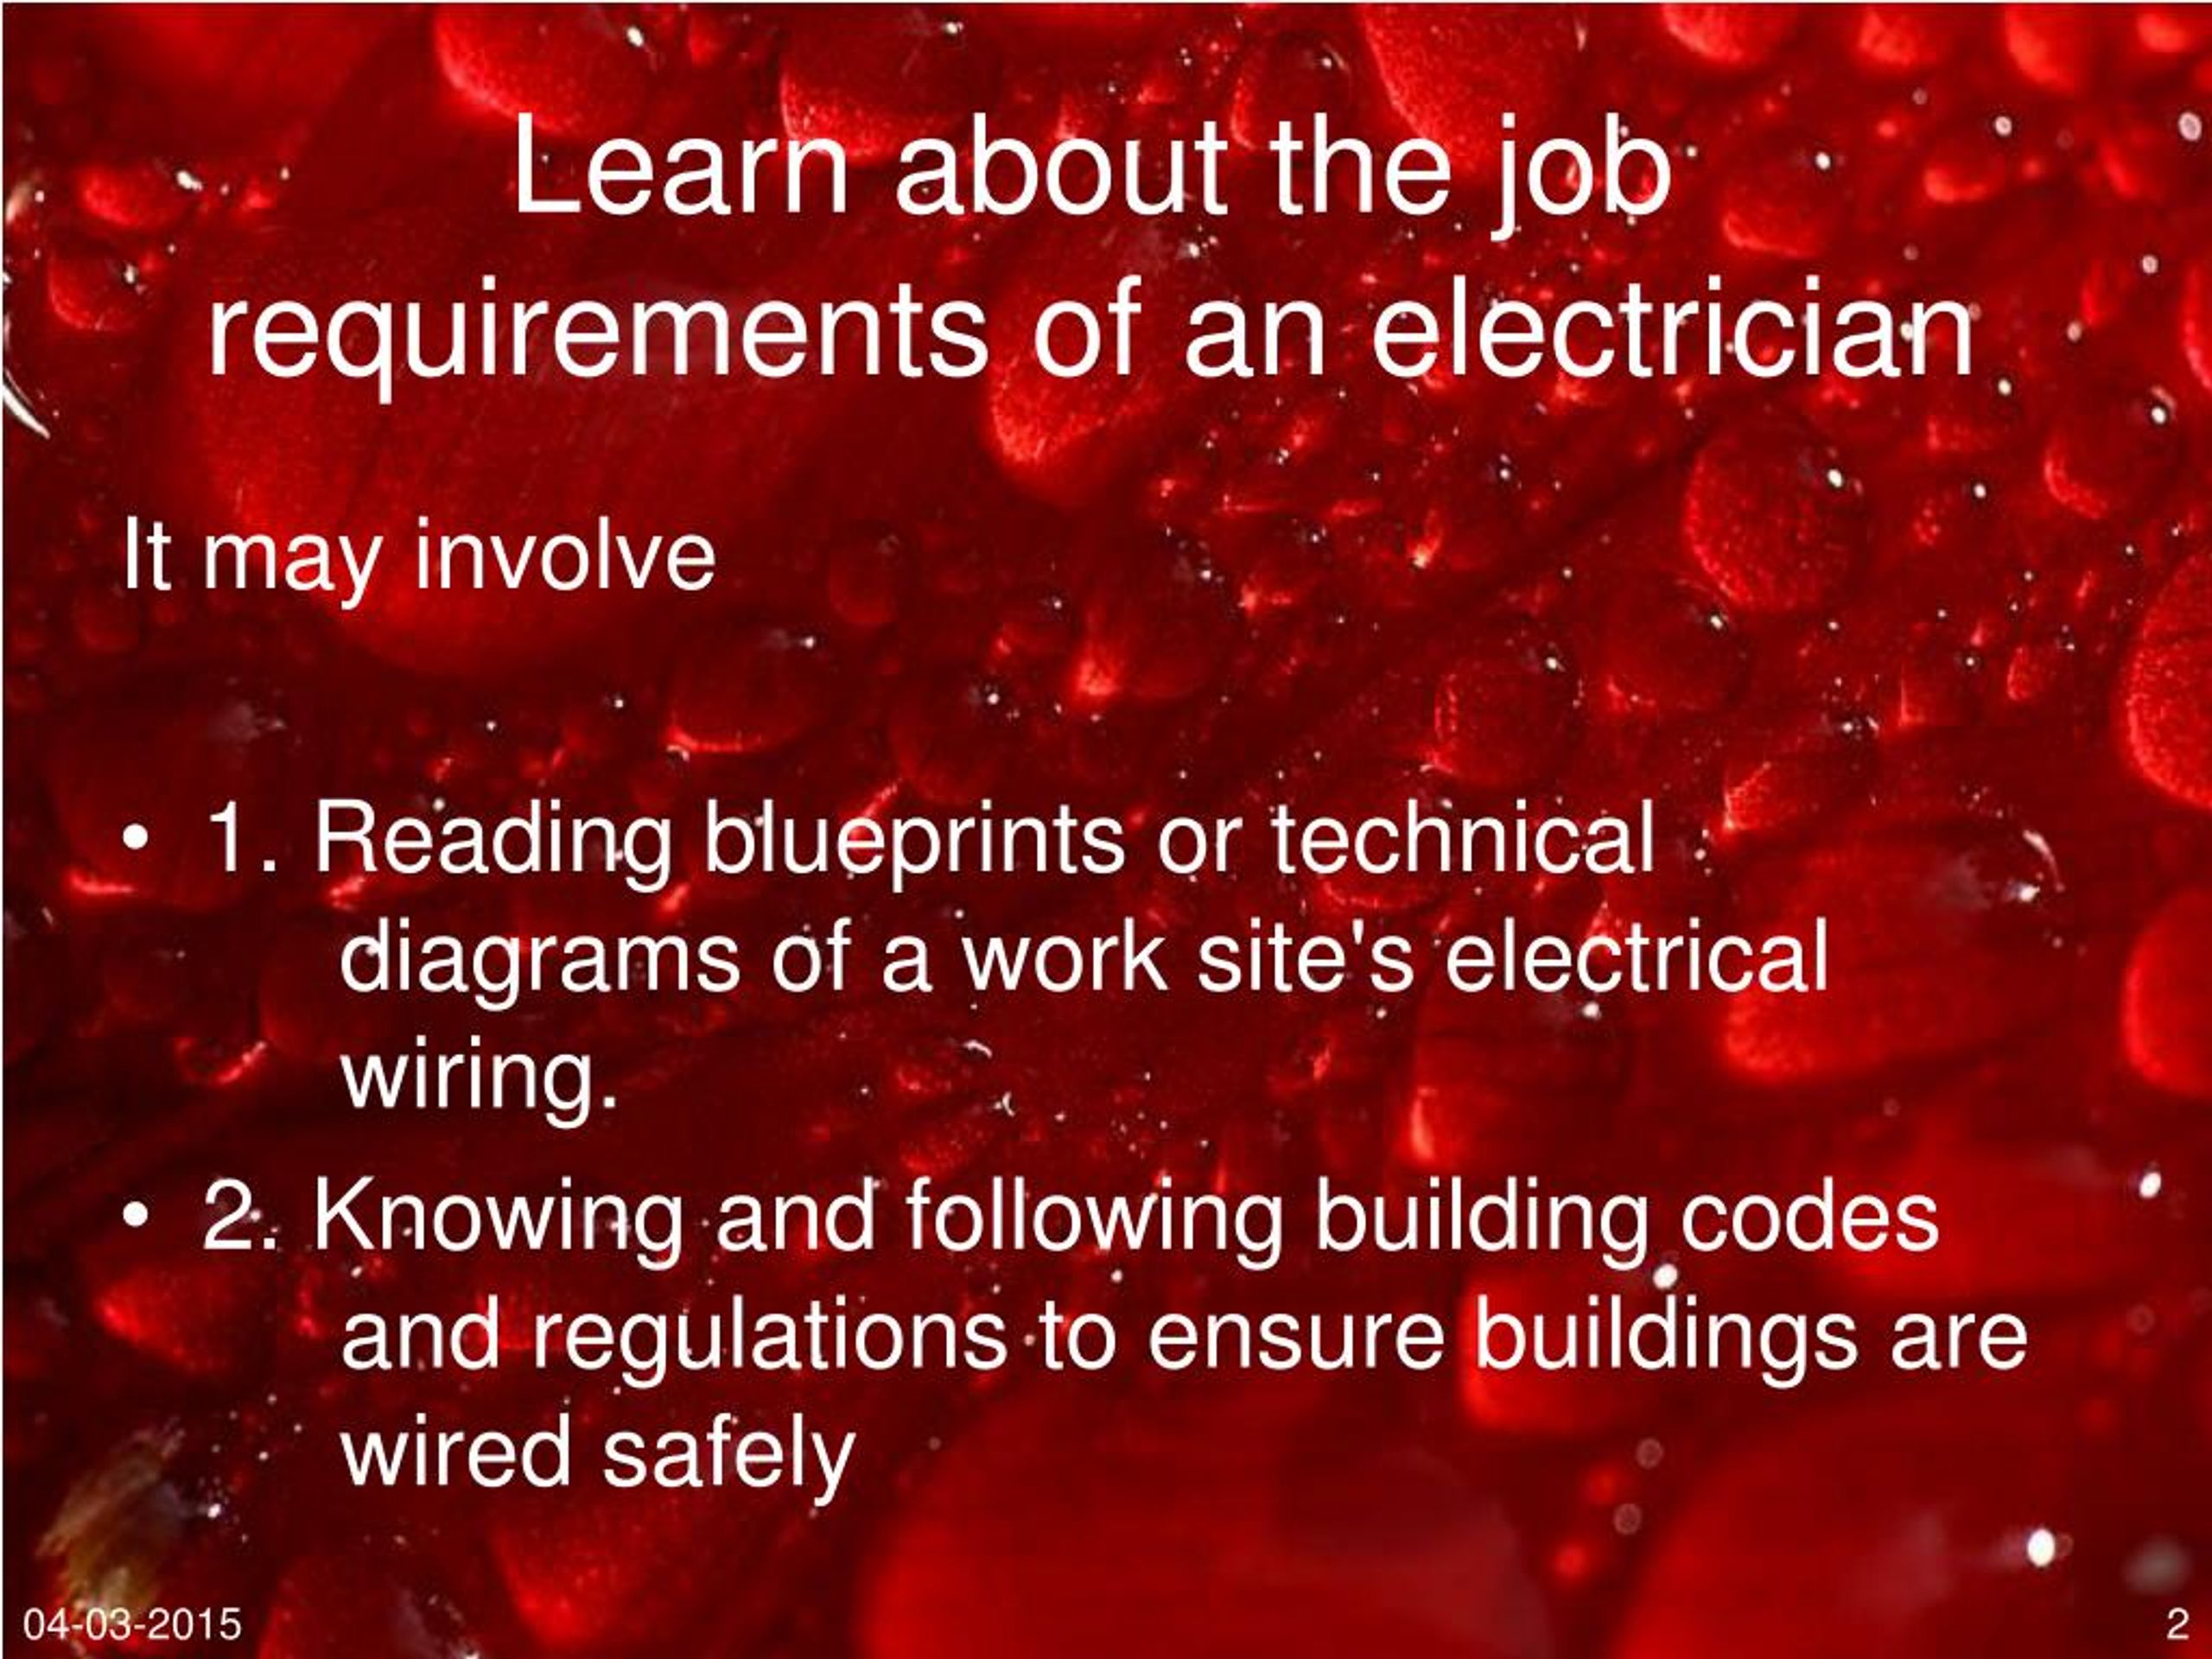 Electrician job education requirements